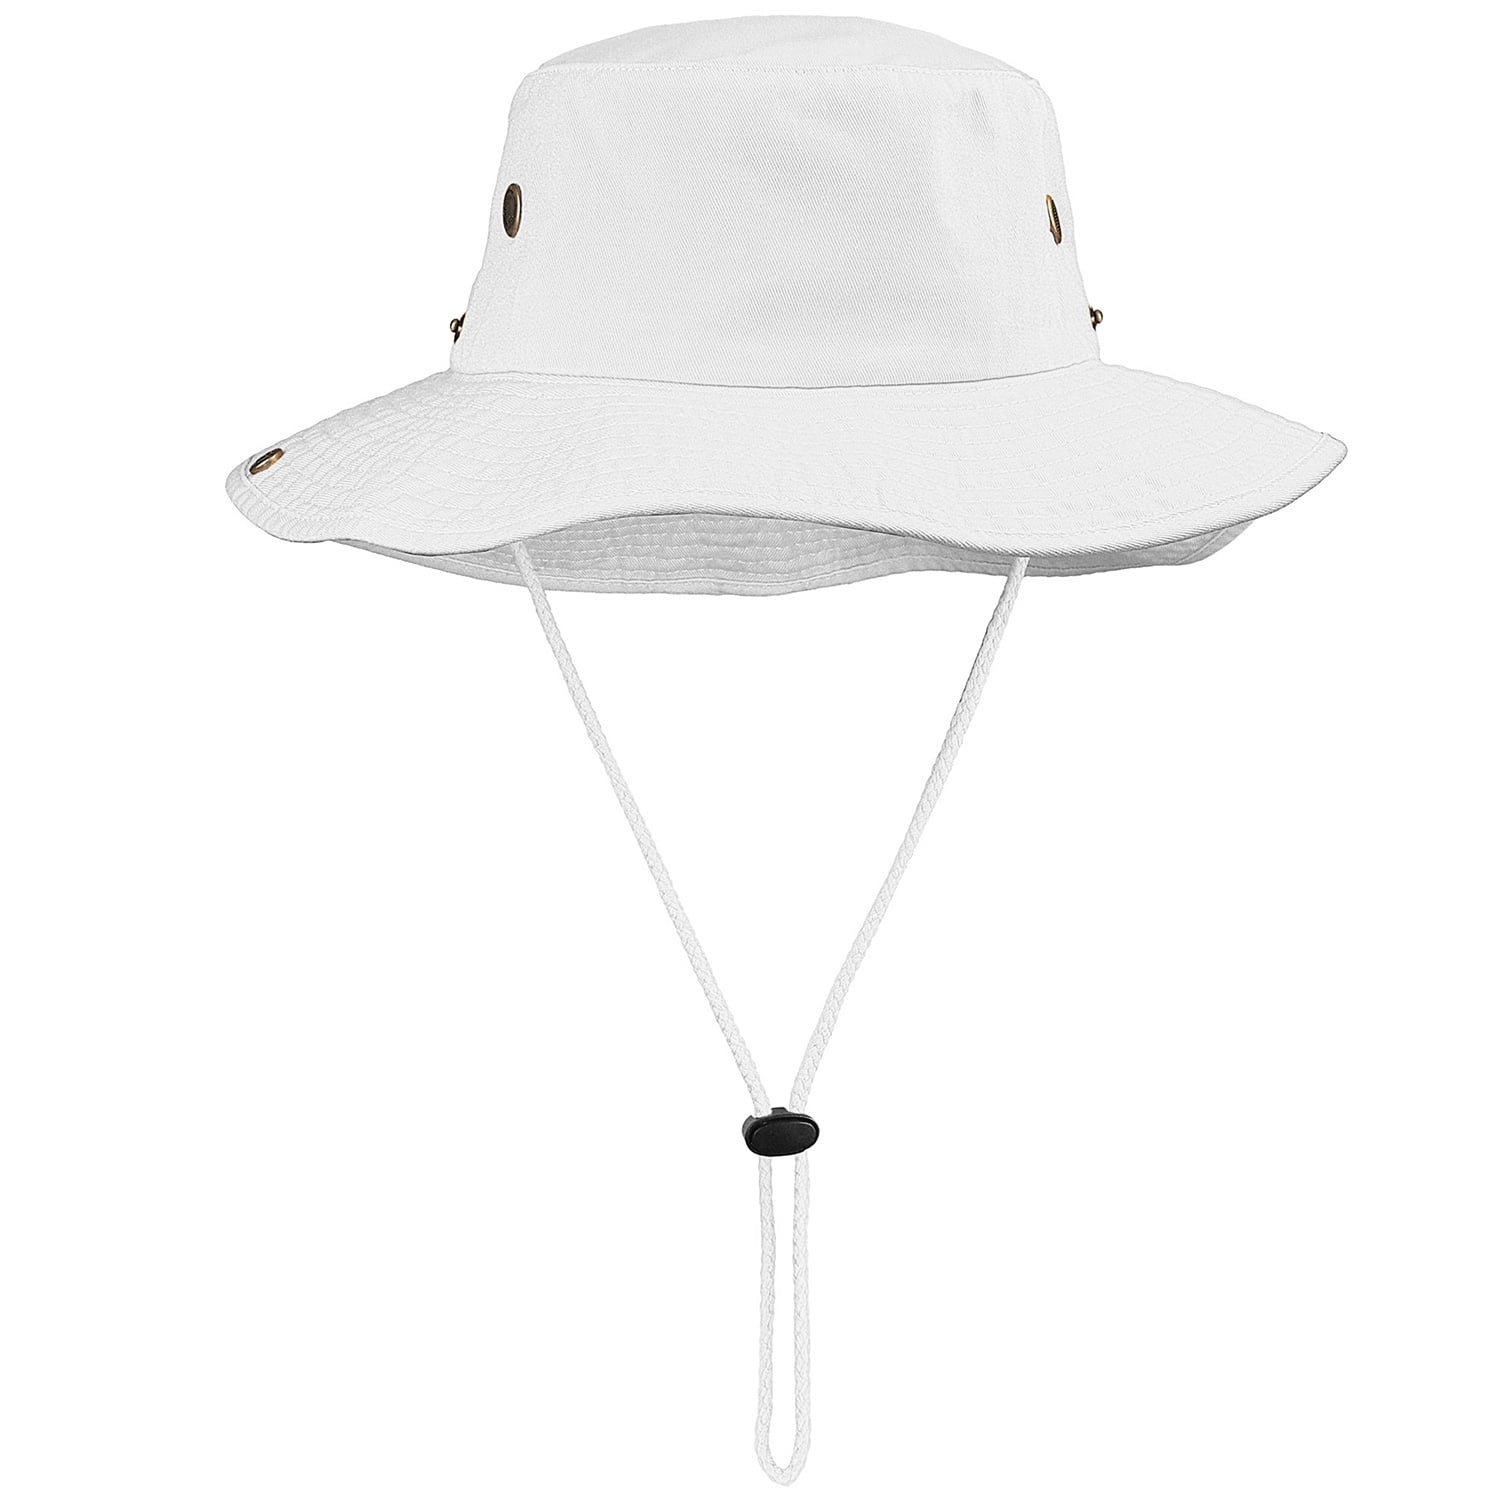 Wide Brim Hiking Fishing Safari Boonie Bucket Hats 100% Cotton UV Sun  Protection For Men Women Outdoor Activities S/M White